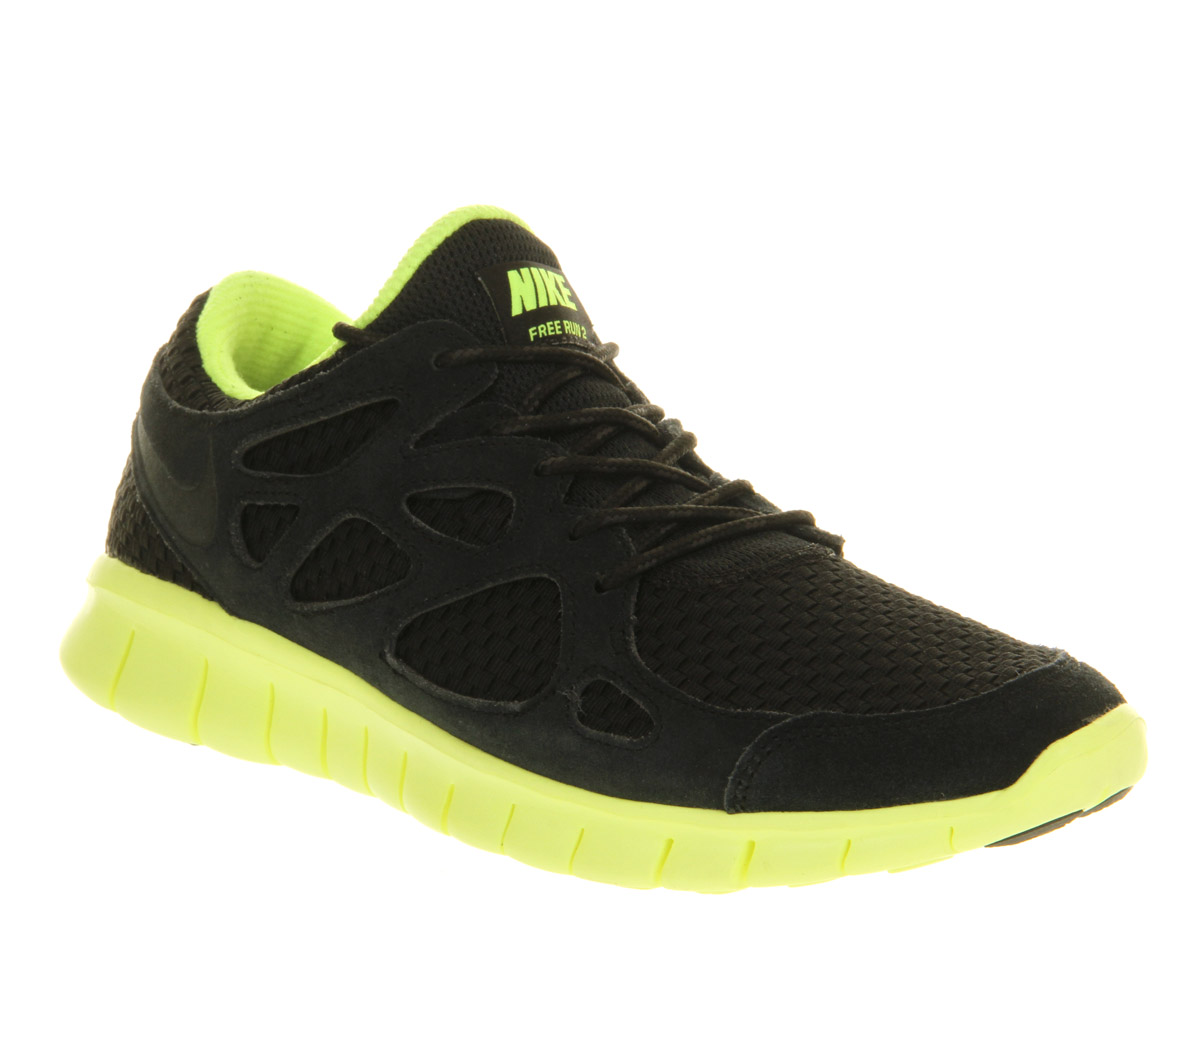 Nike Free Run 2 Black Volt in Yellow - Lyst